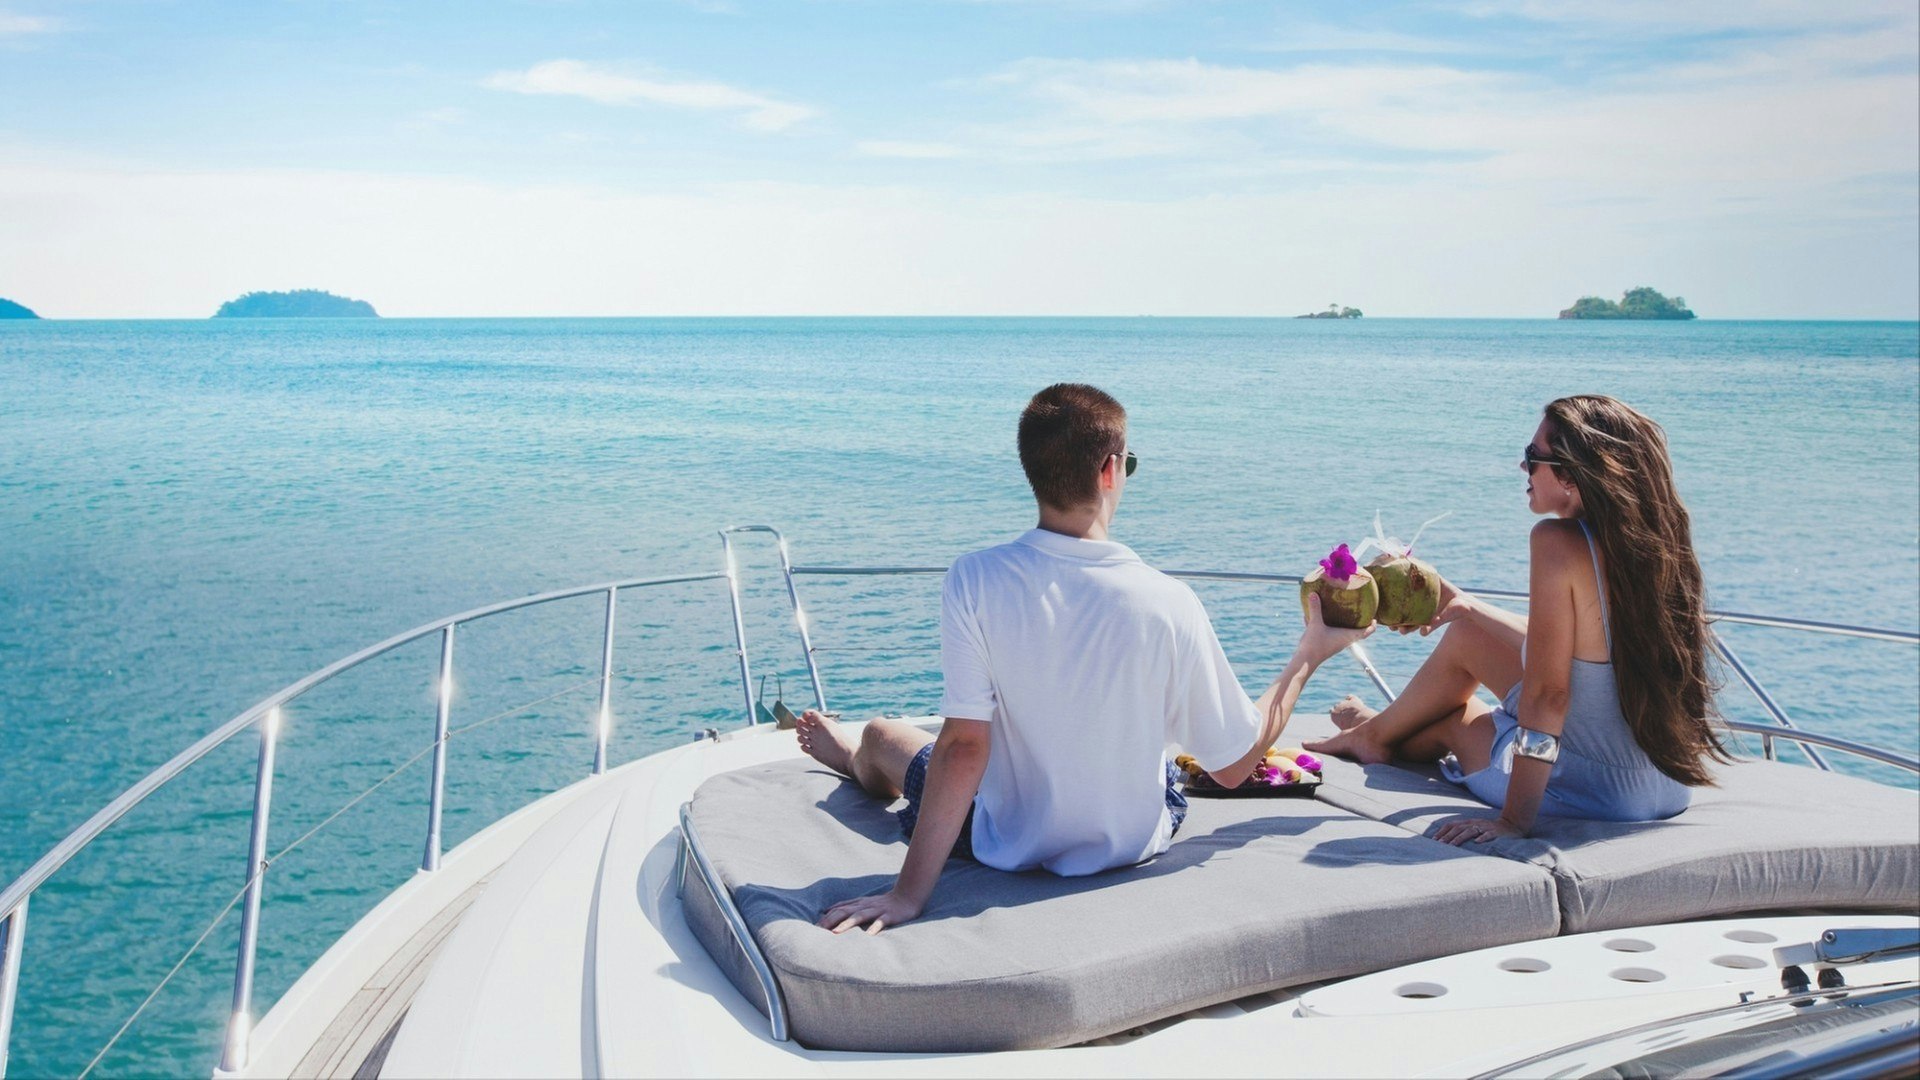 honeymoon on luxury yacht, luxurious lifestyle and travel